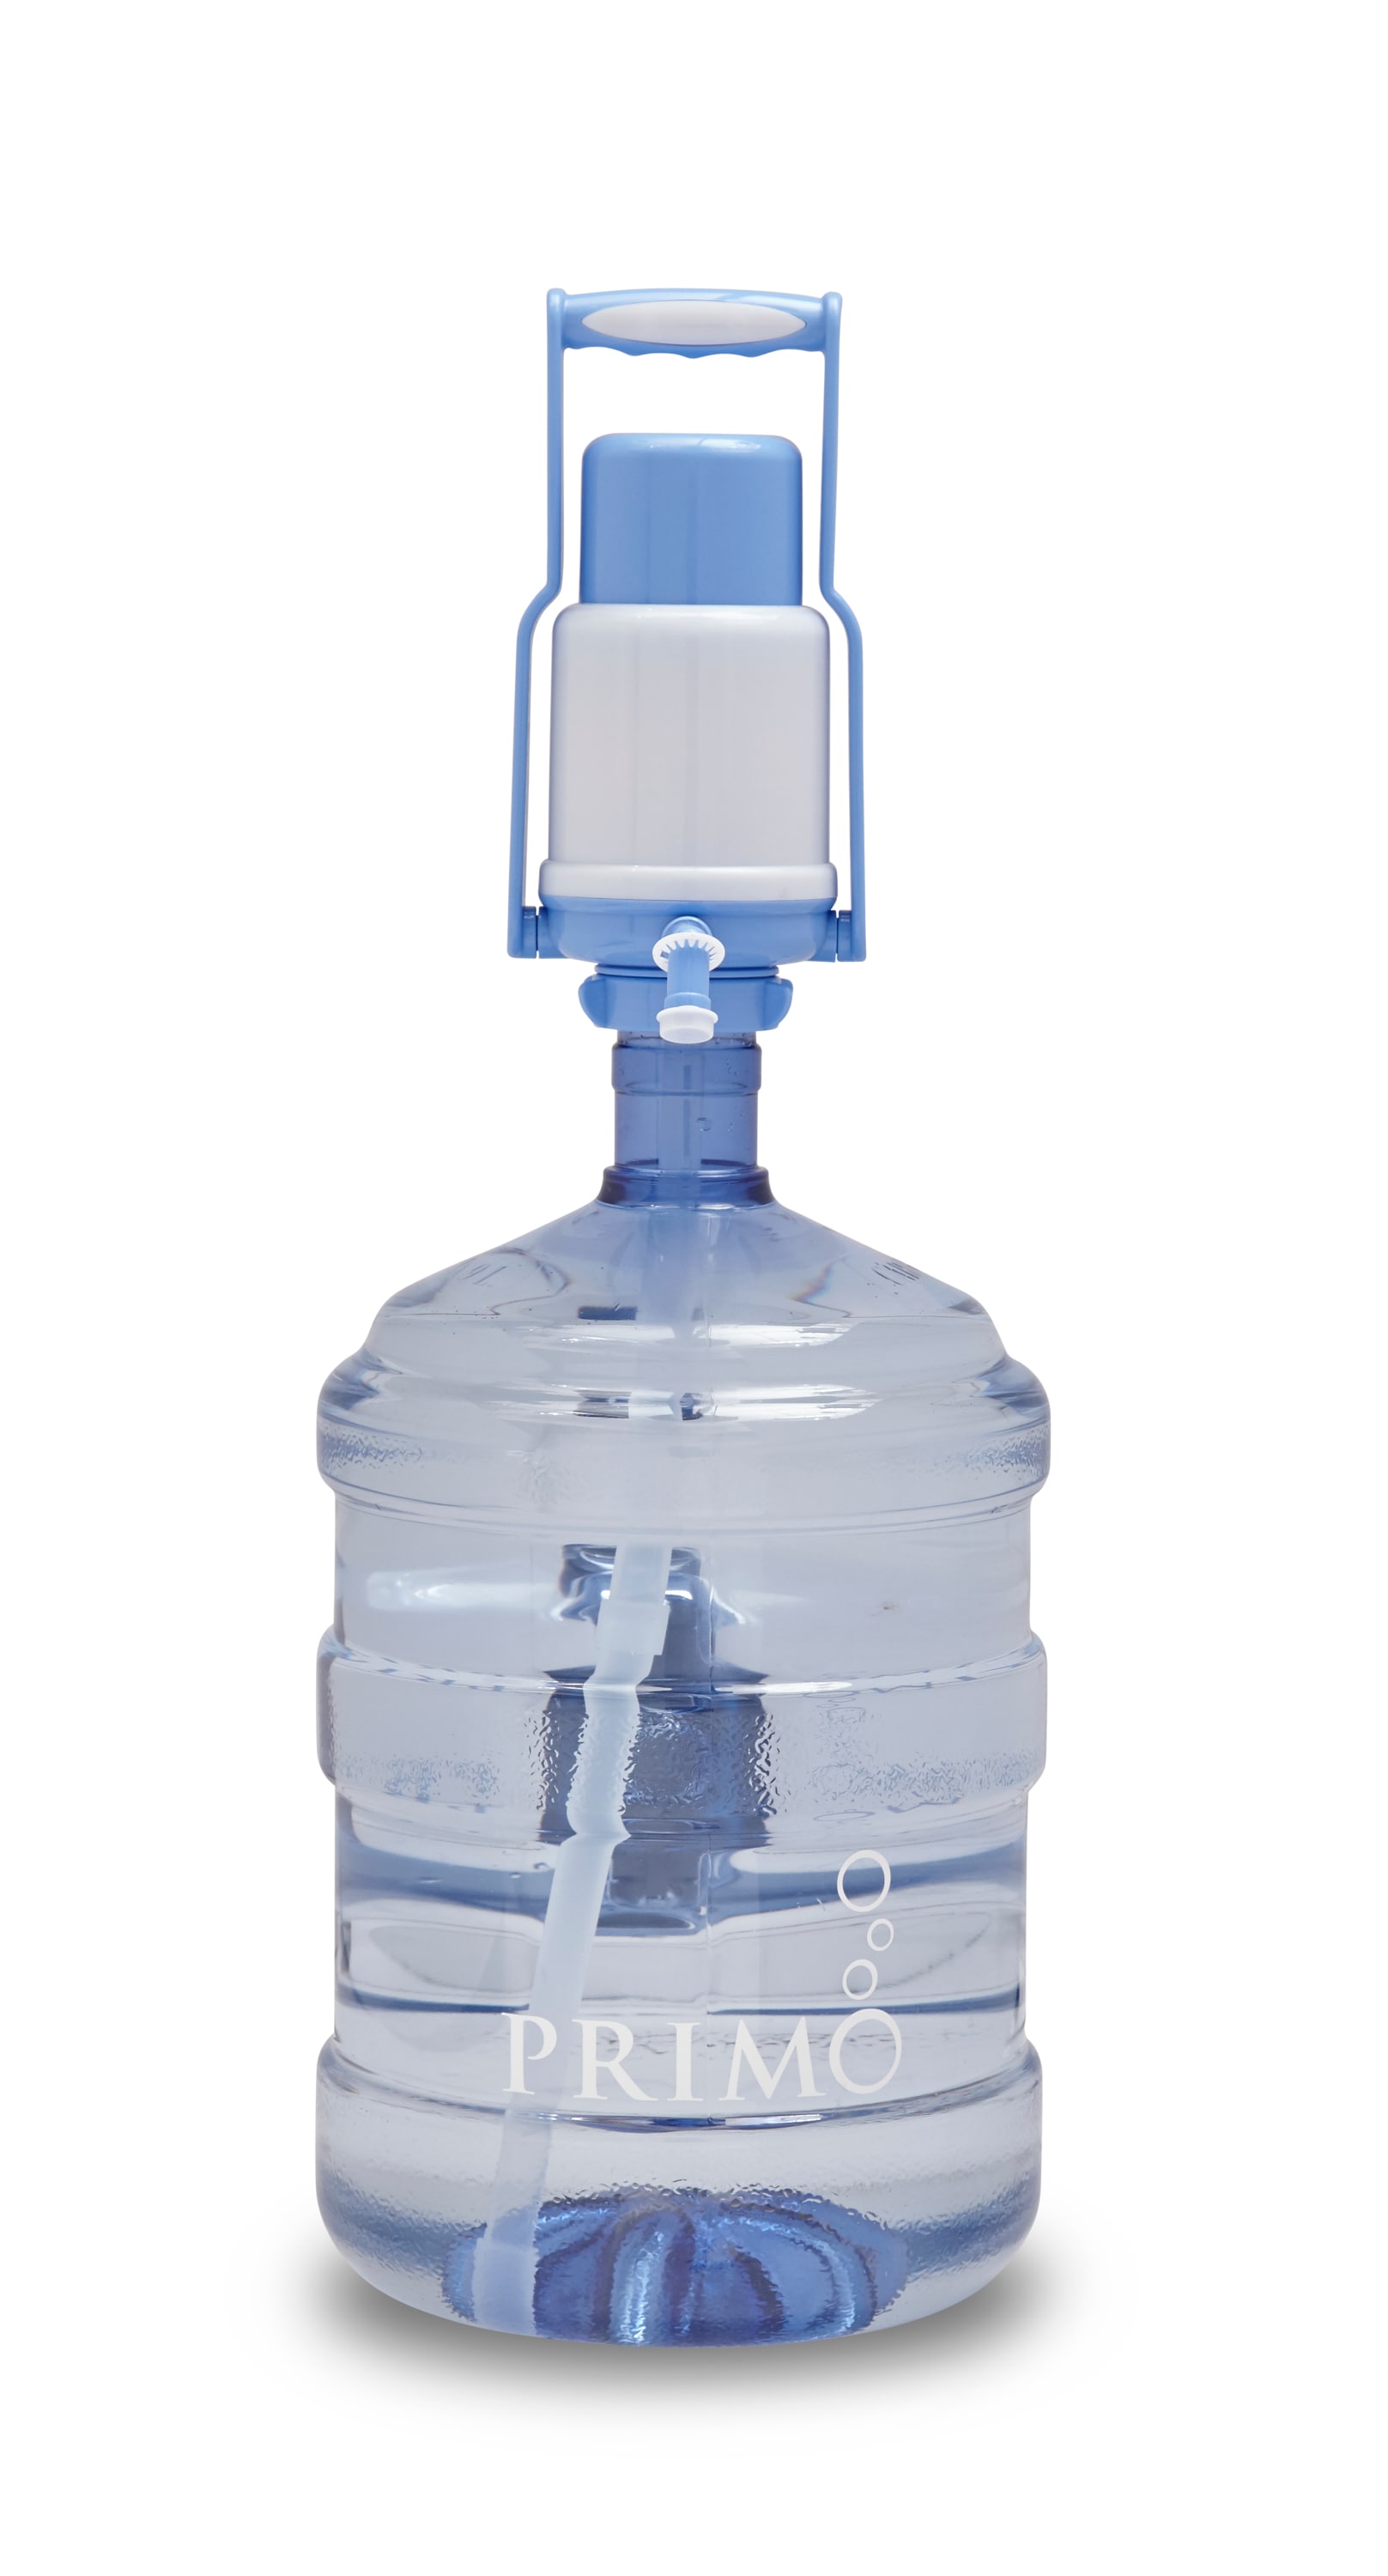 Ozarka® Spring Water, 5-Gallon w/Handle